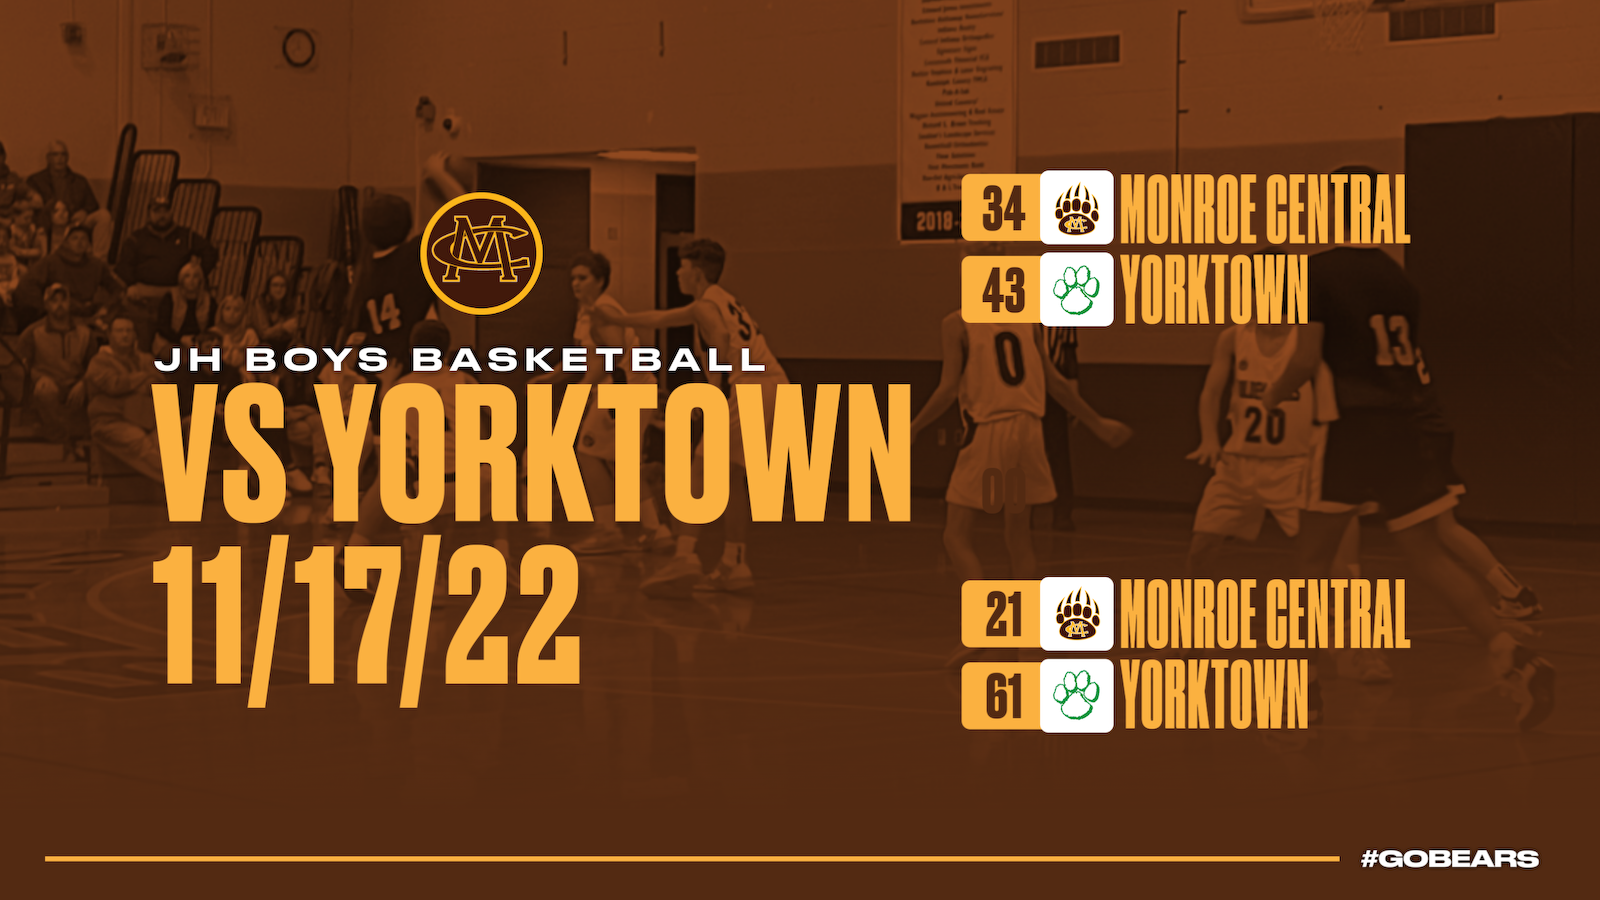 JH Boys Basketball falls to Yorktown cover photo